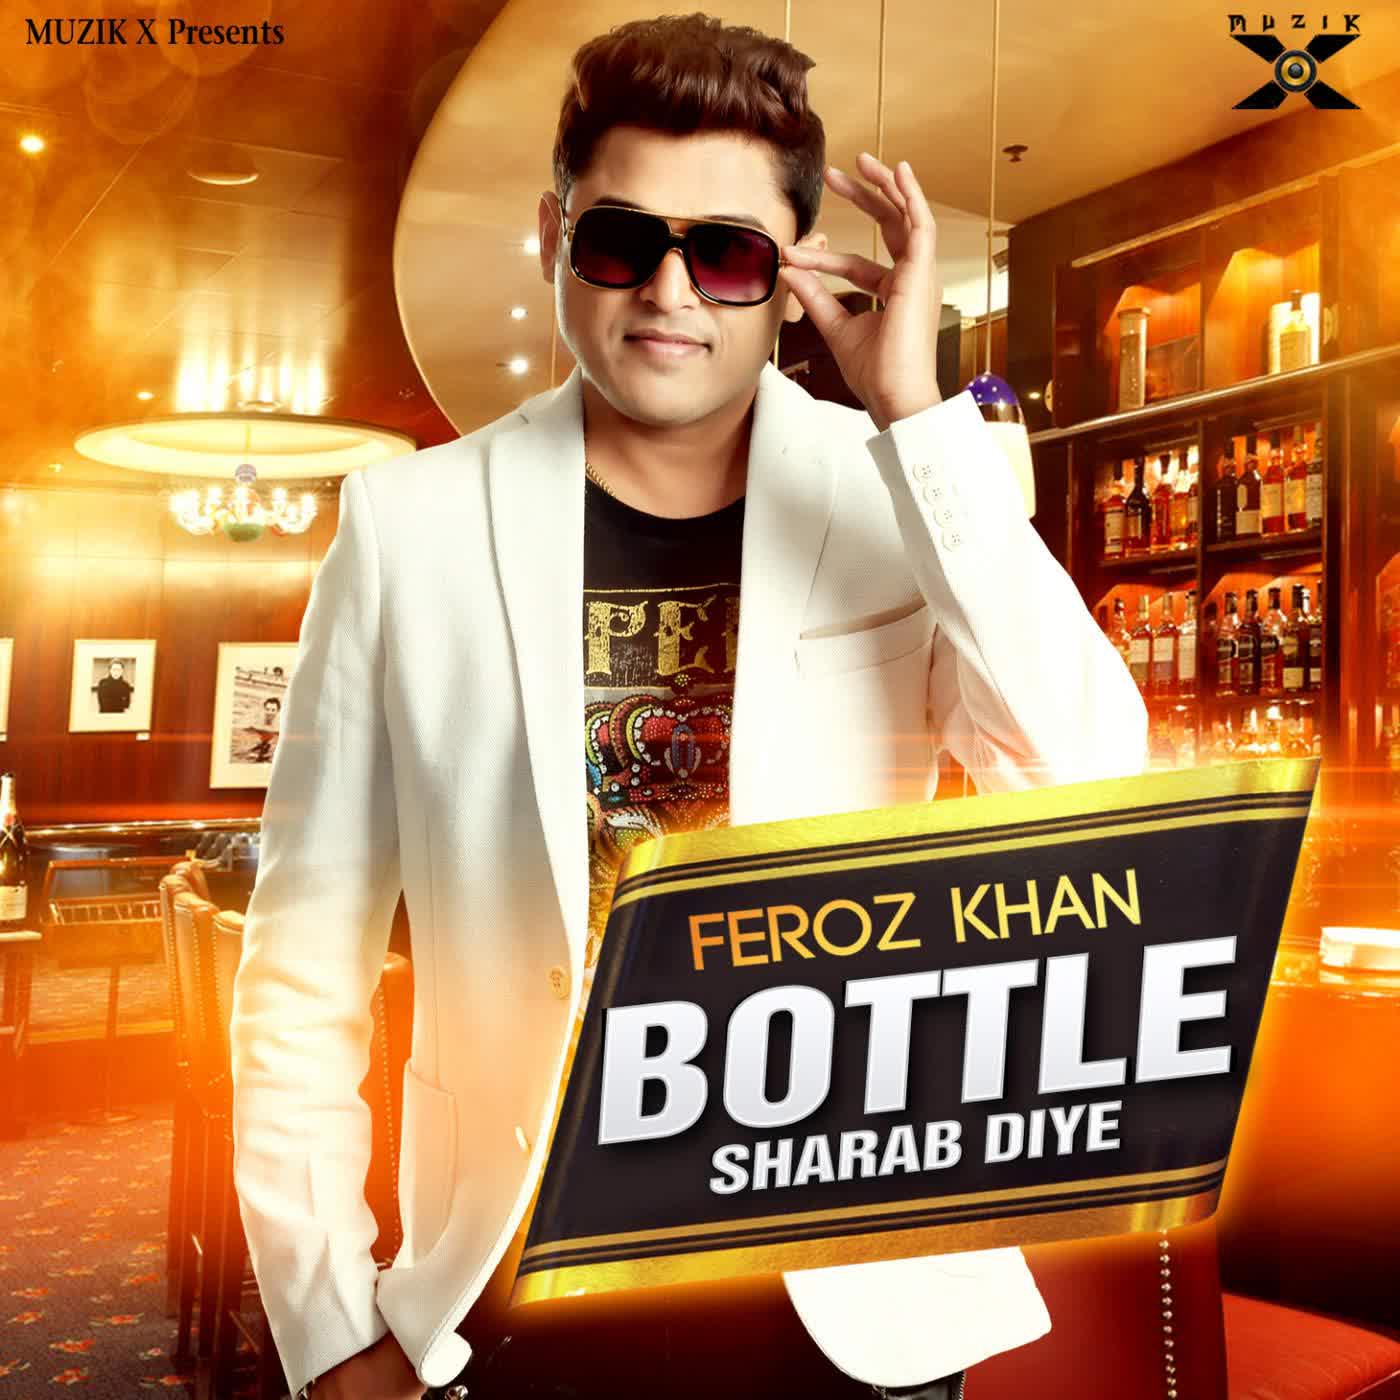 Bottle Sharab Diye Feroz Khan  Mp3 song download